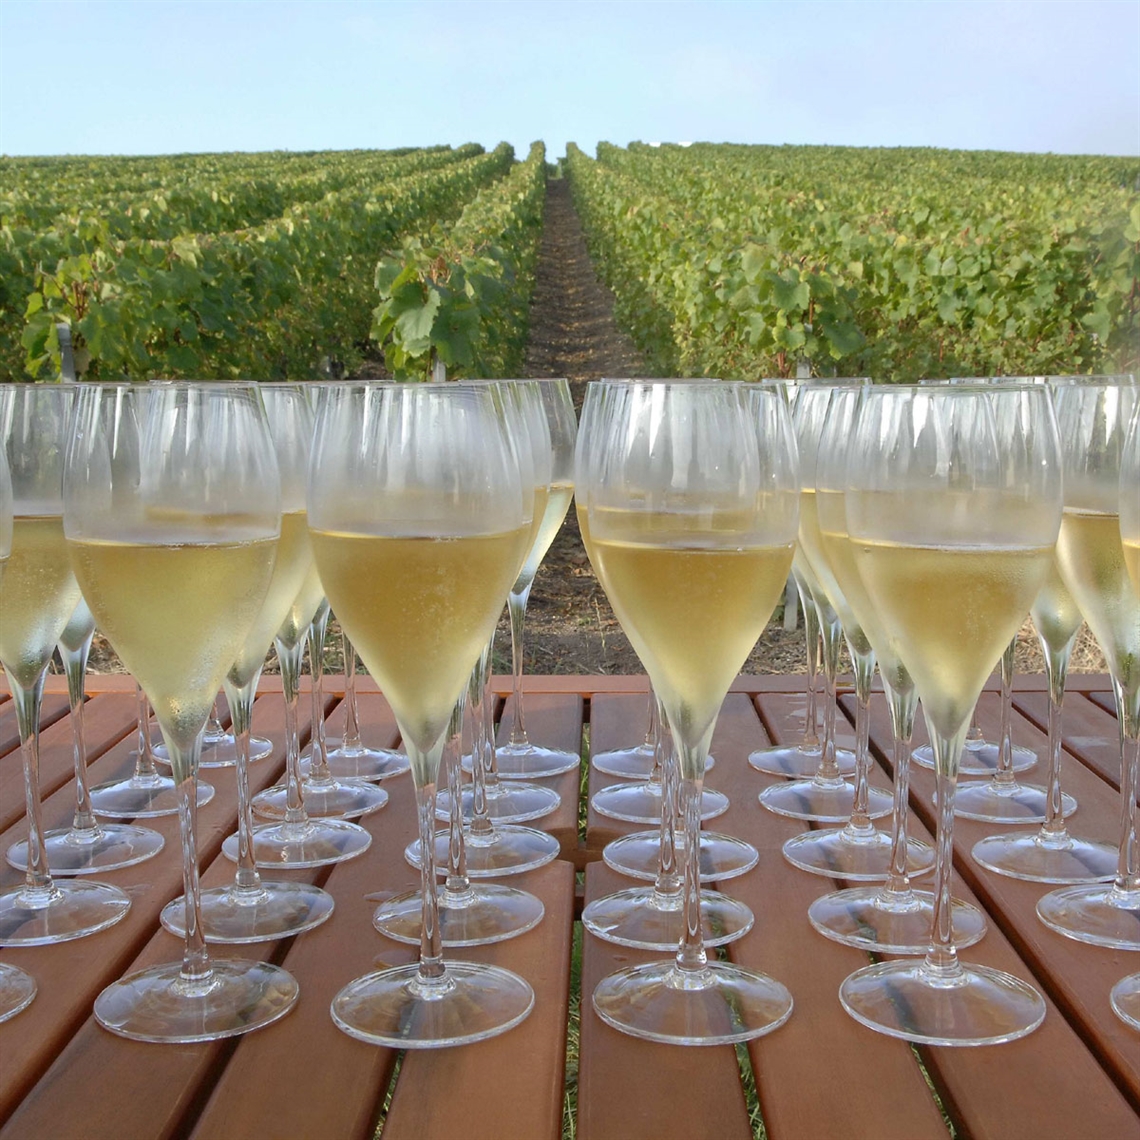 Lehmann Glass Opale Champagne / Sparkling Wine Glass 170ml - Set of 6